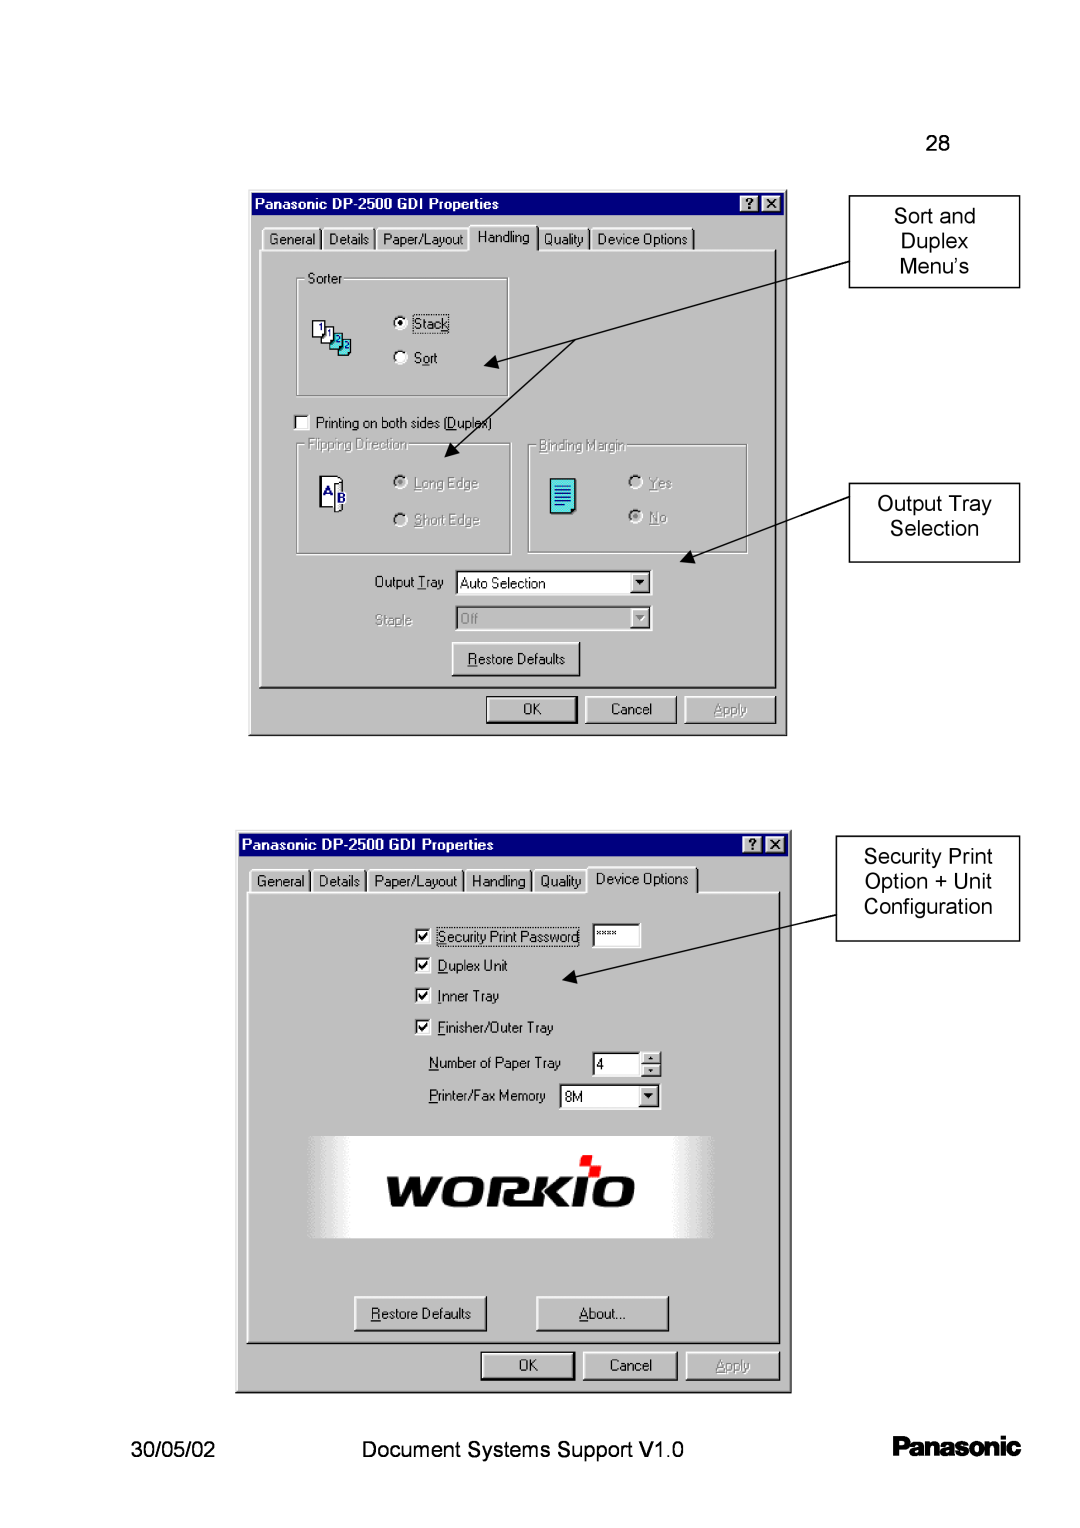 Barco DP2000/2500 Sort and Duplex Menu’s Output Tray Selection Security Print, Option + Unit Configuration, 30/05/02 